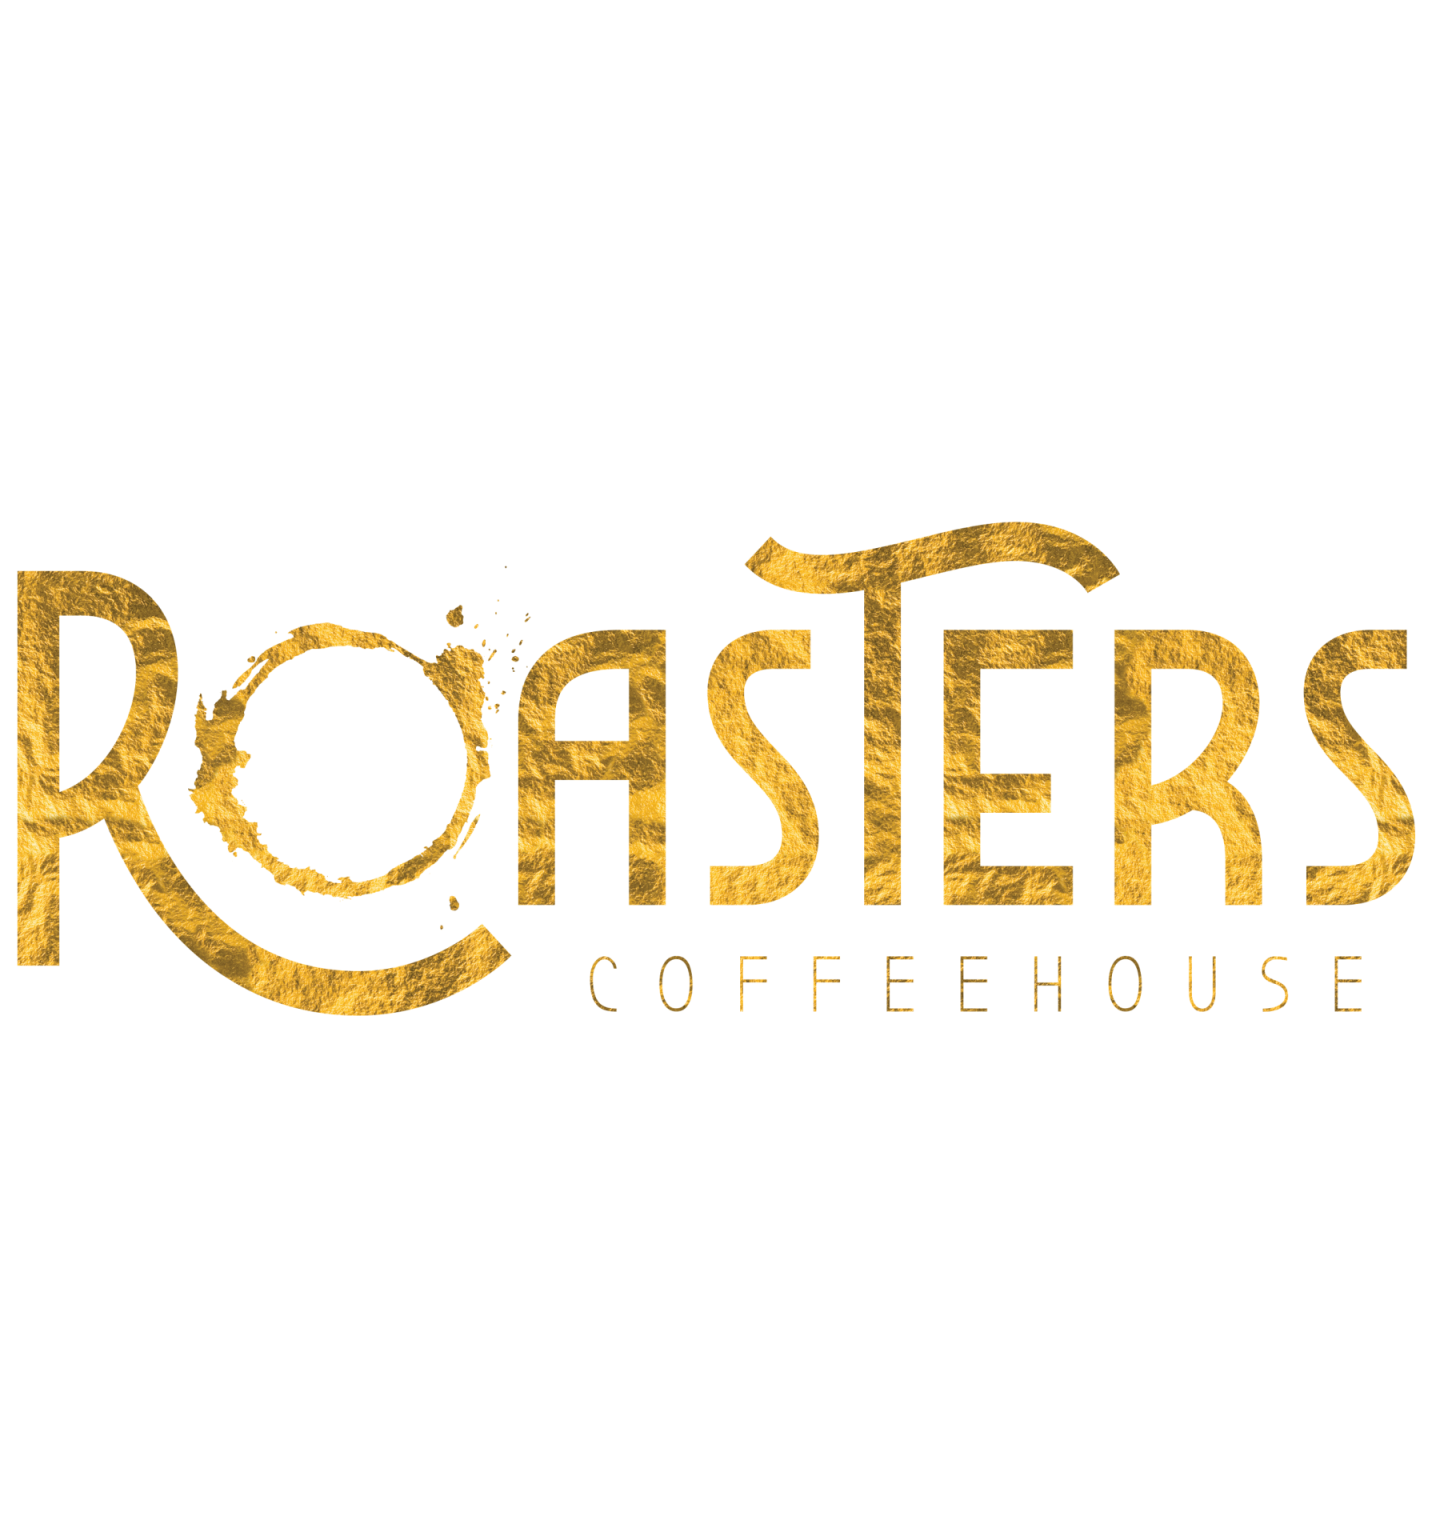 Roasters Coffeehouse logo